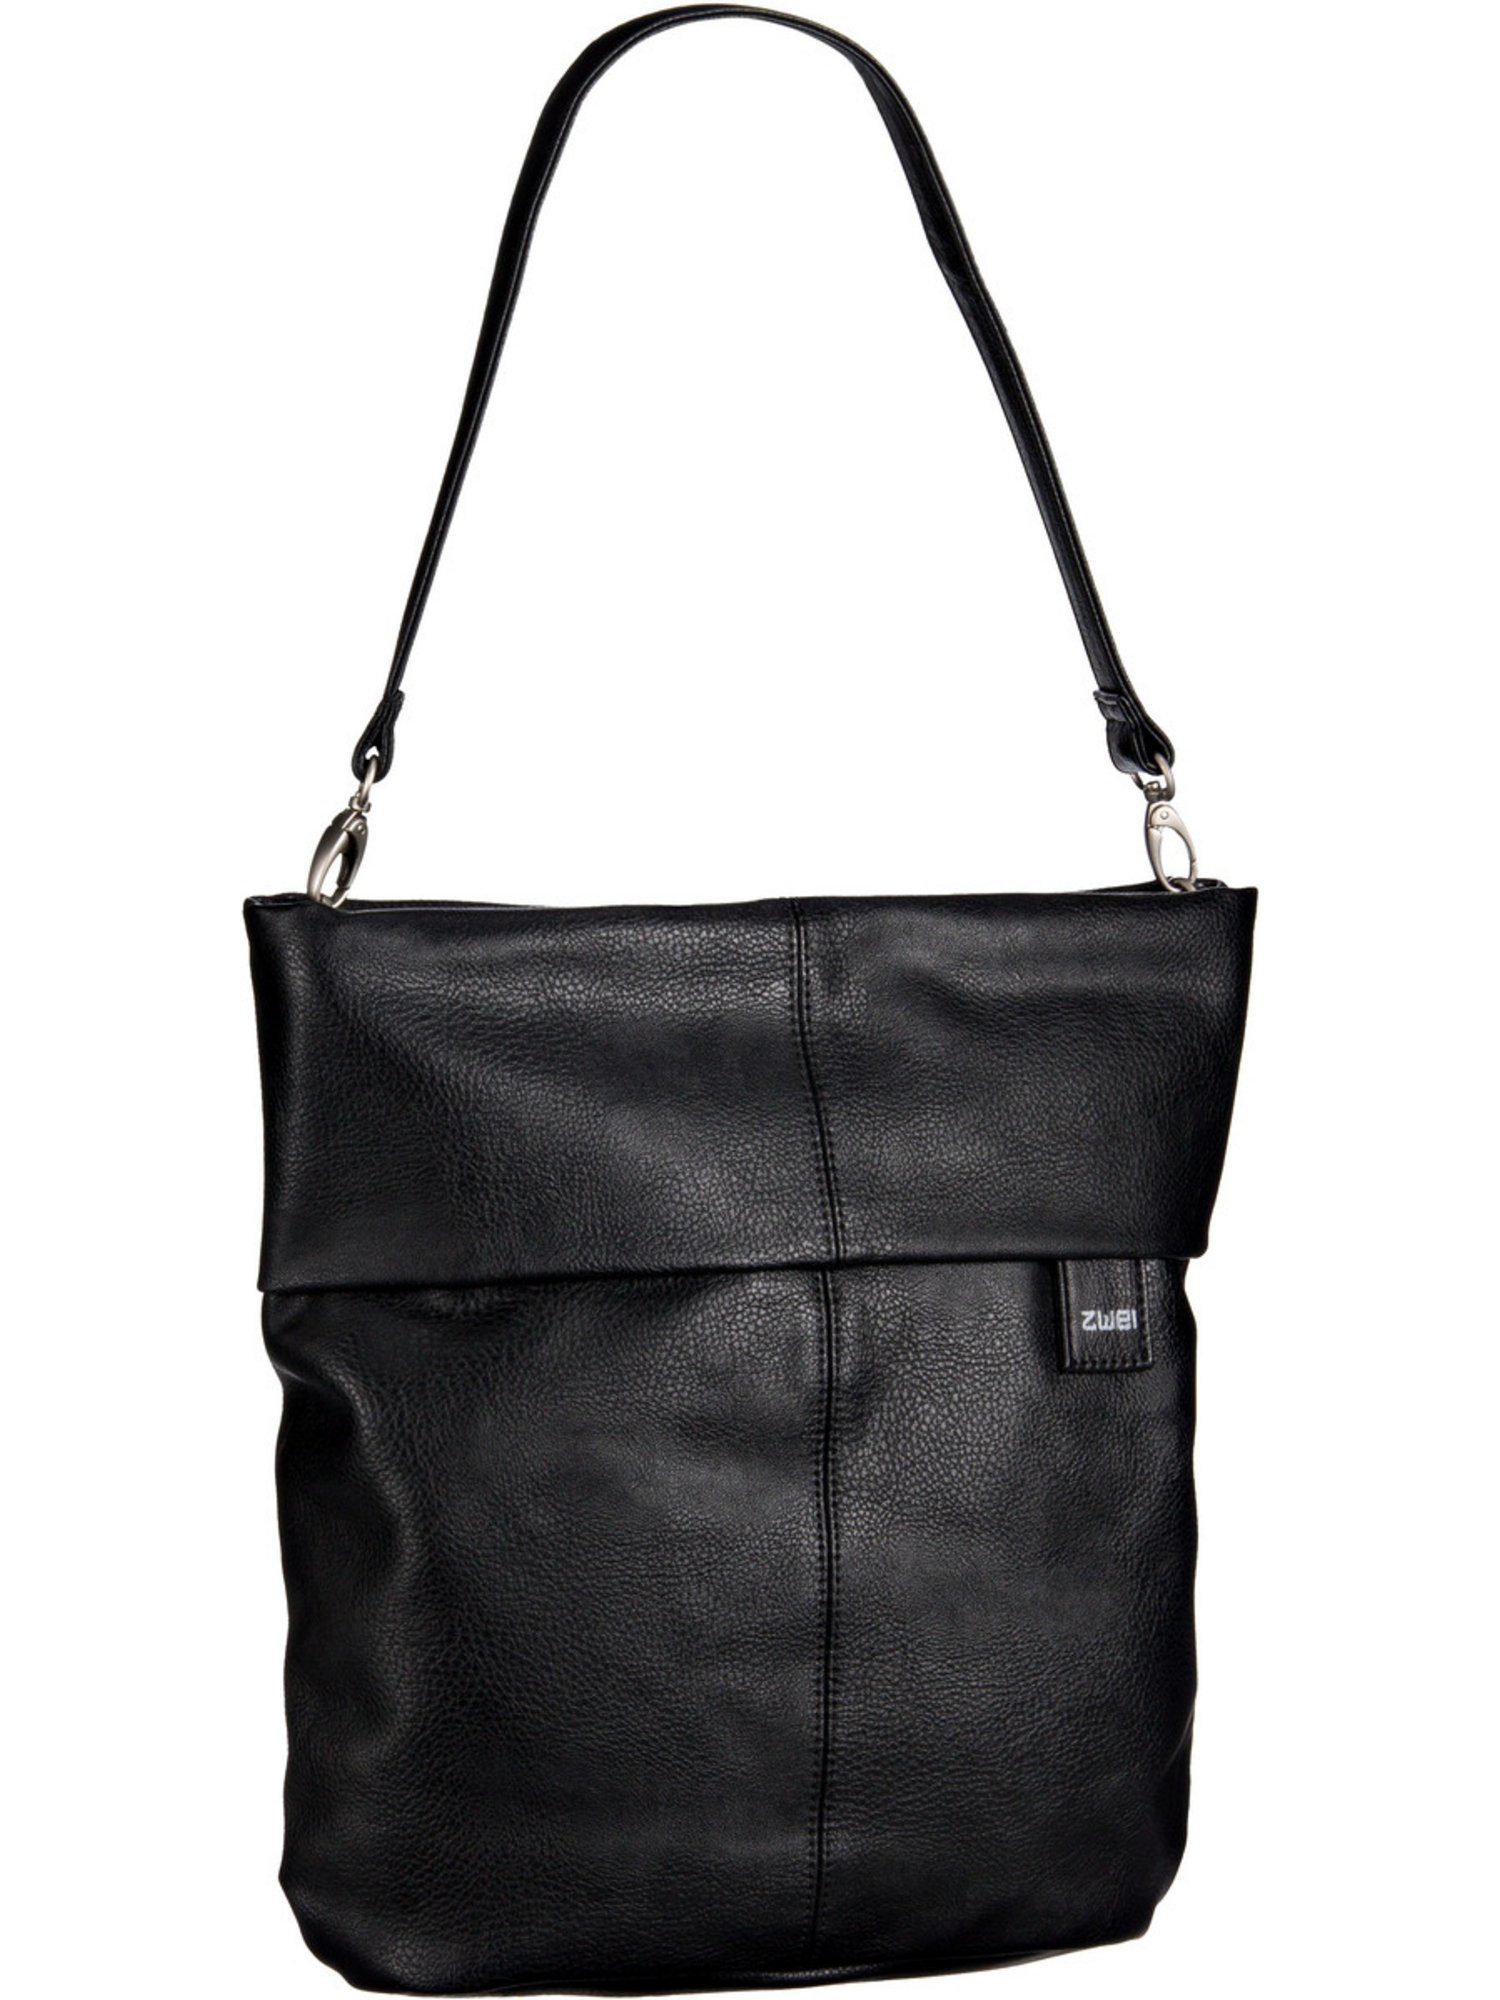 Zwei Handtasche Mademoiselle M12, Hobo Bag